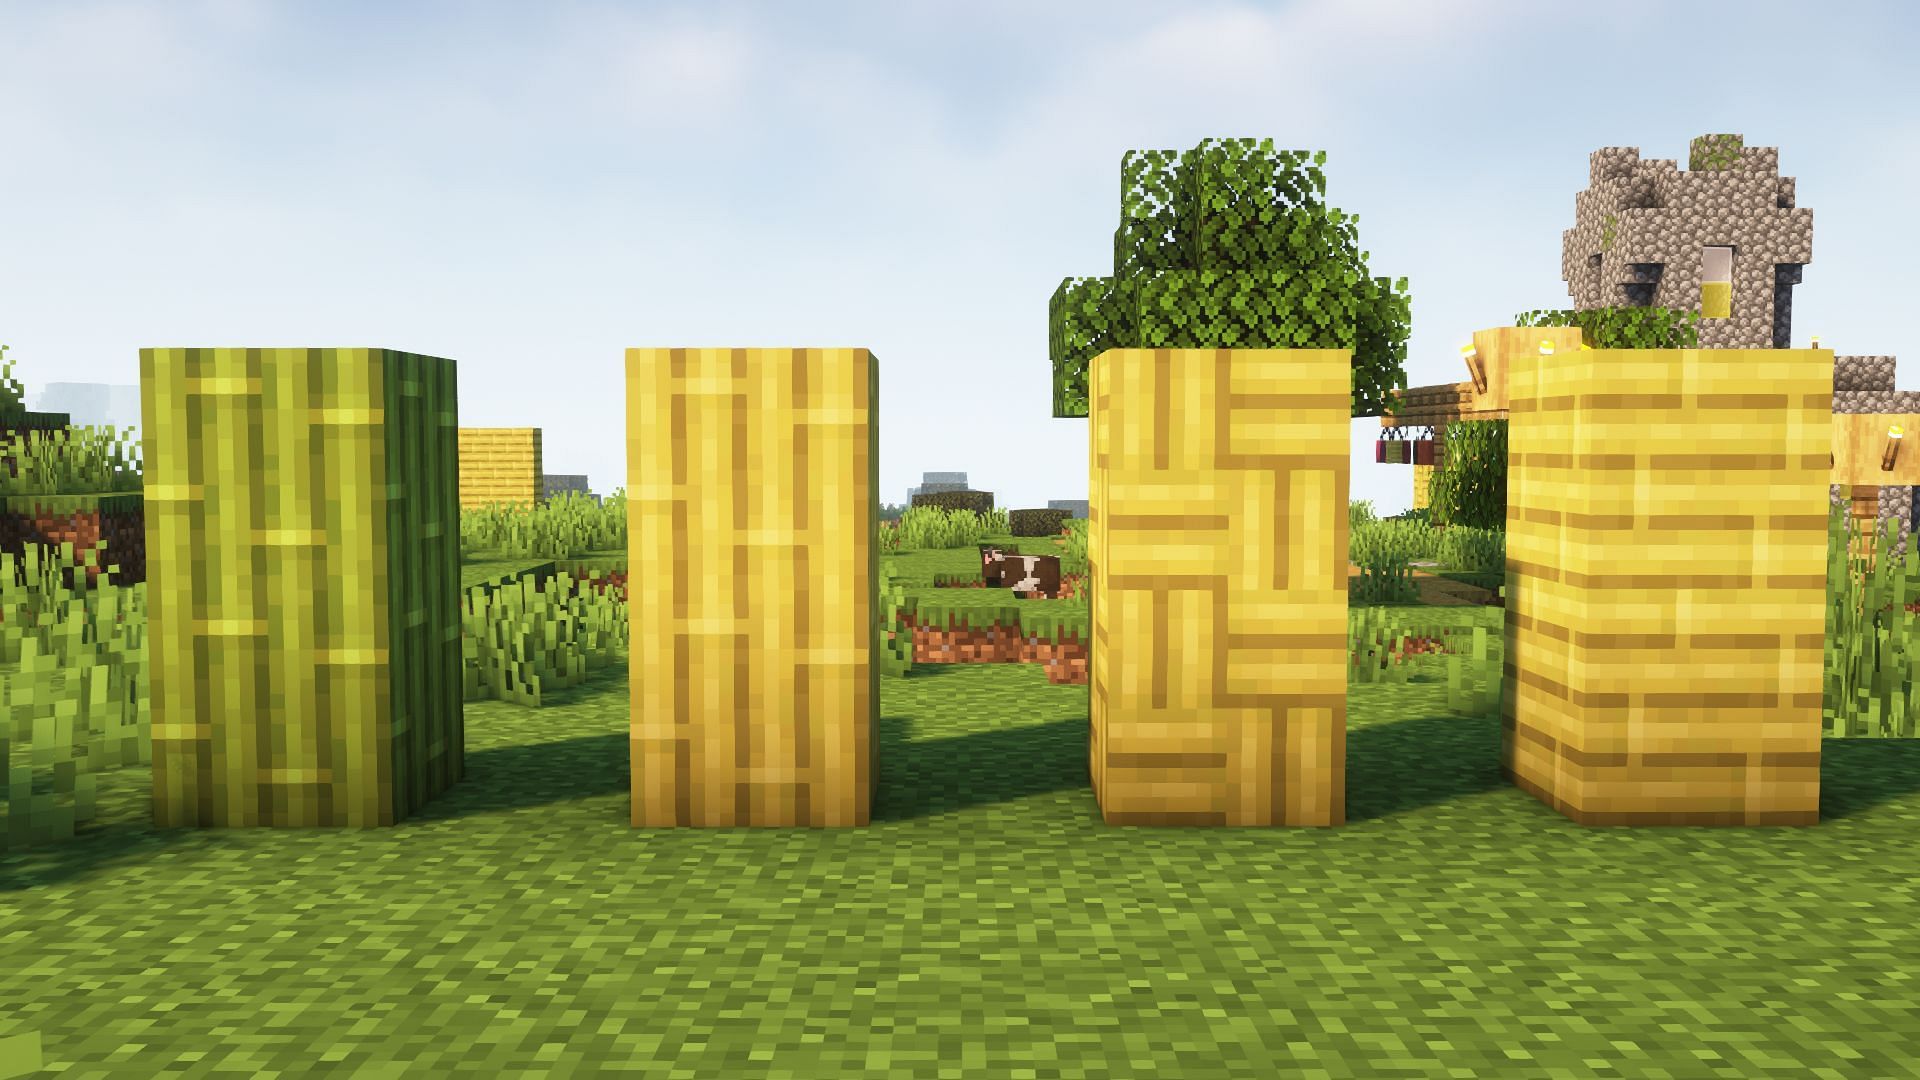 Bamboo Blocks Mod for Minecraft 1.16.5/1.15.2/1.14.4